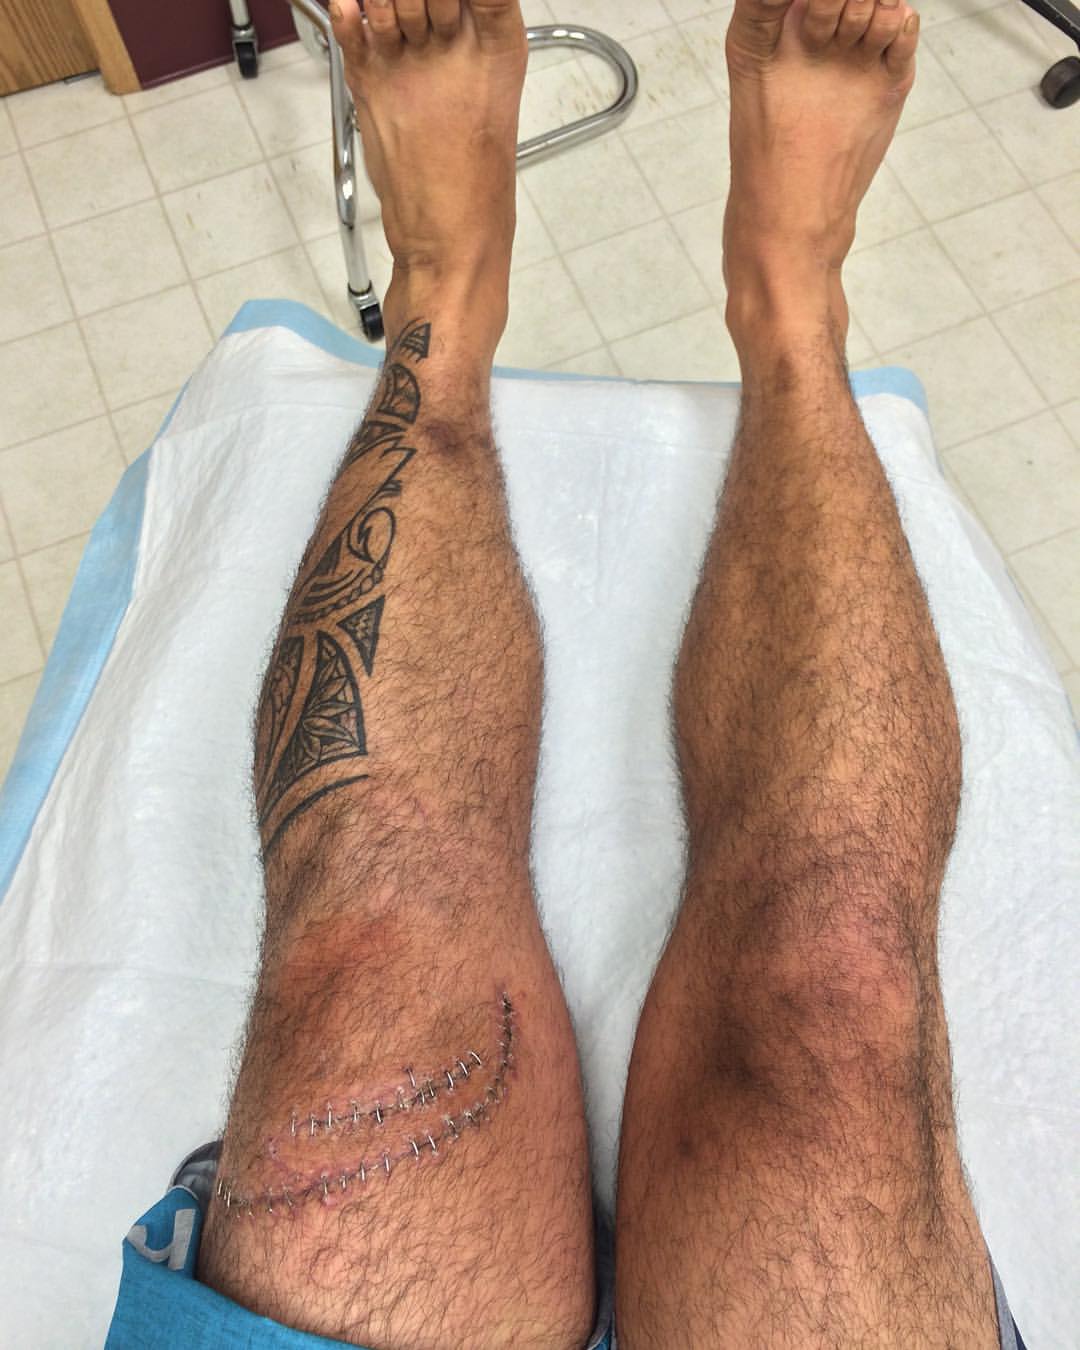 Braxton Rocha's legs after healing from the shark bite injuries.